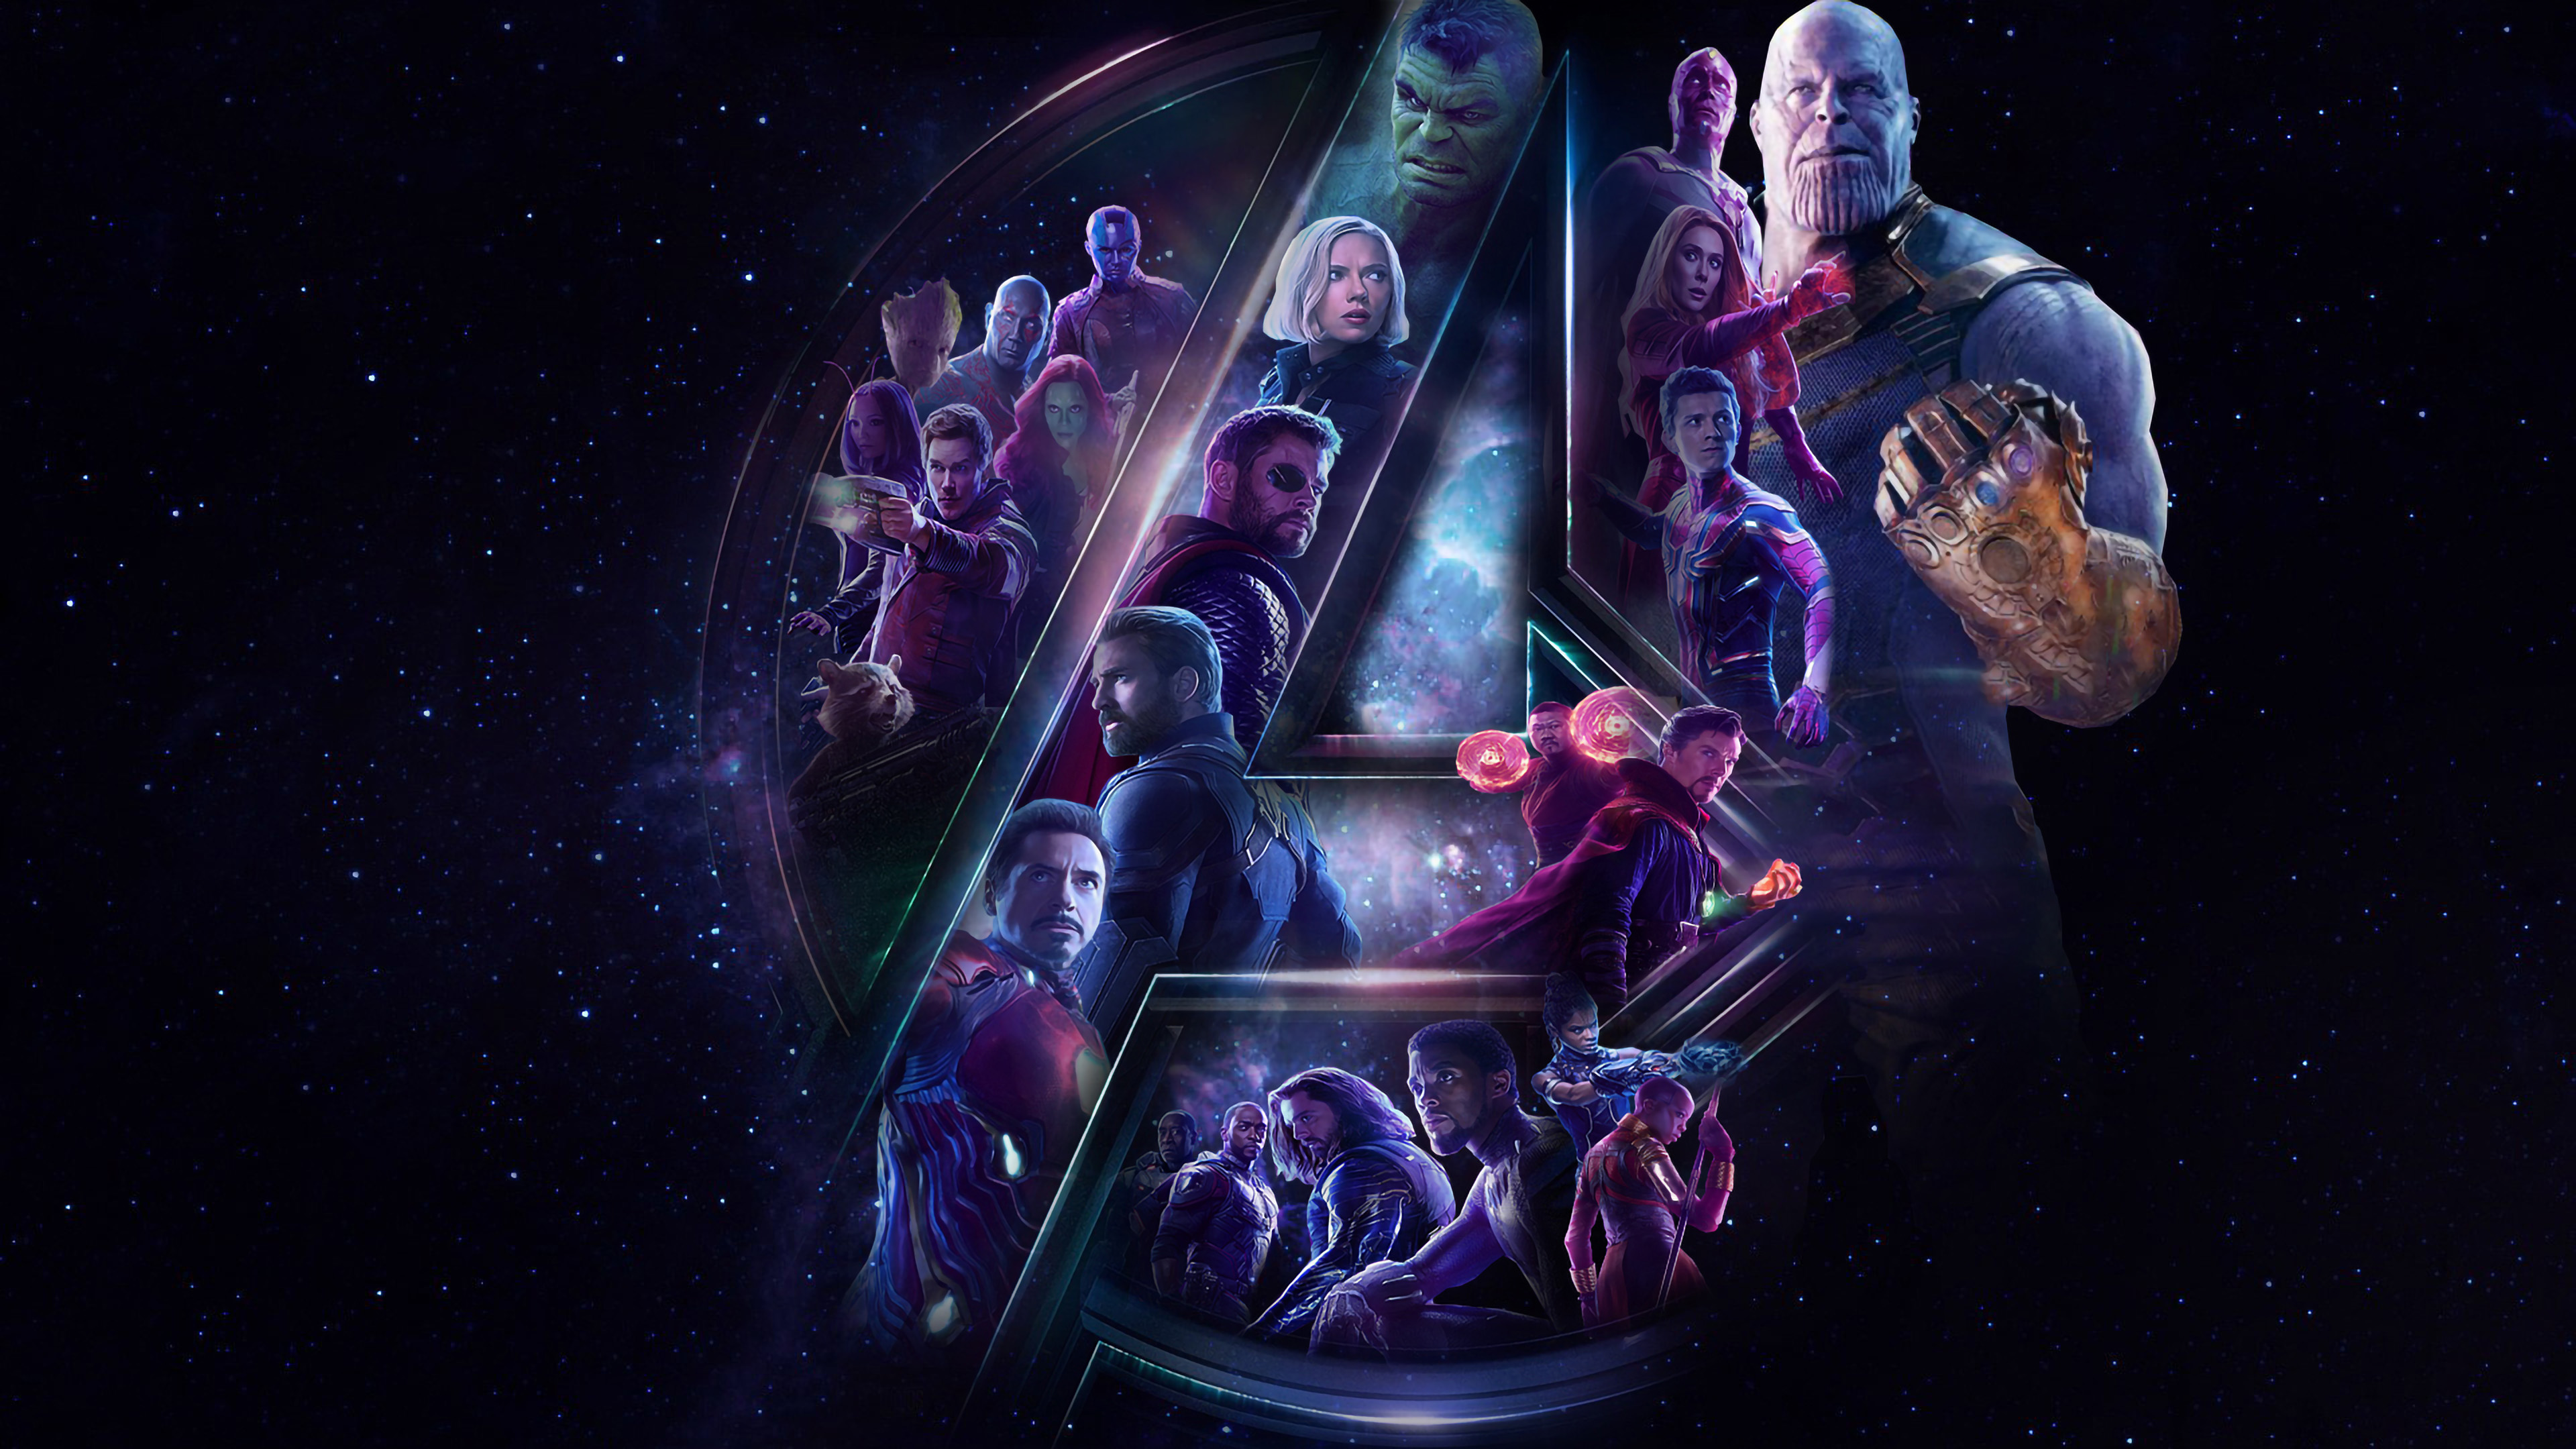 Free Download Avengers Infinity War All Superheros And Villain Poster Artwork 4k 3840x2160 For